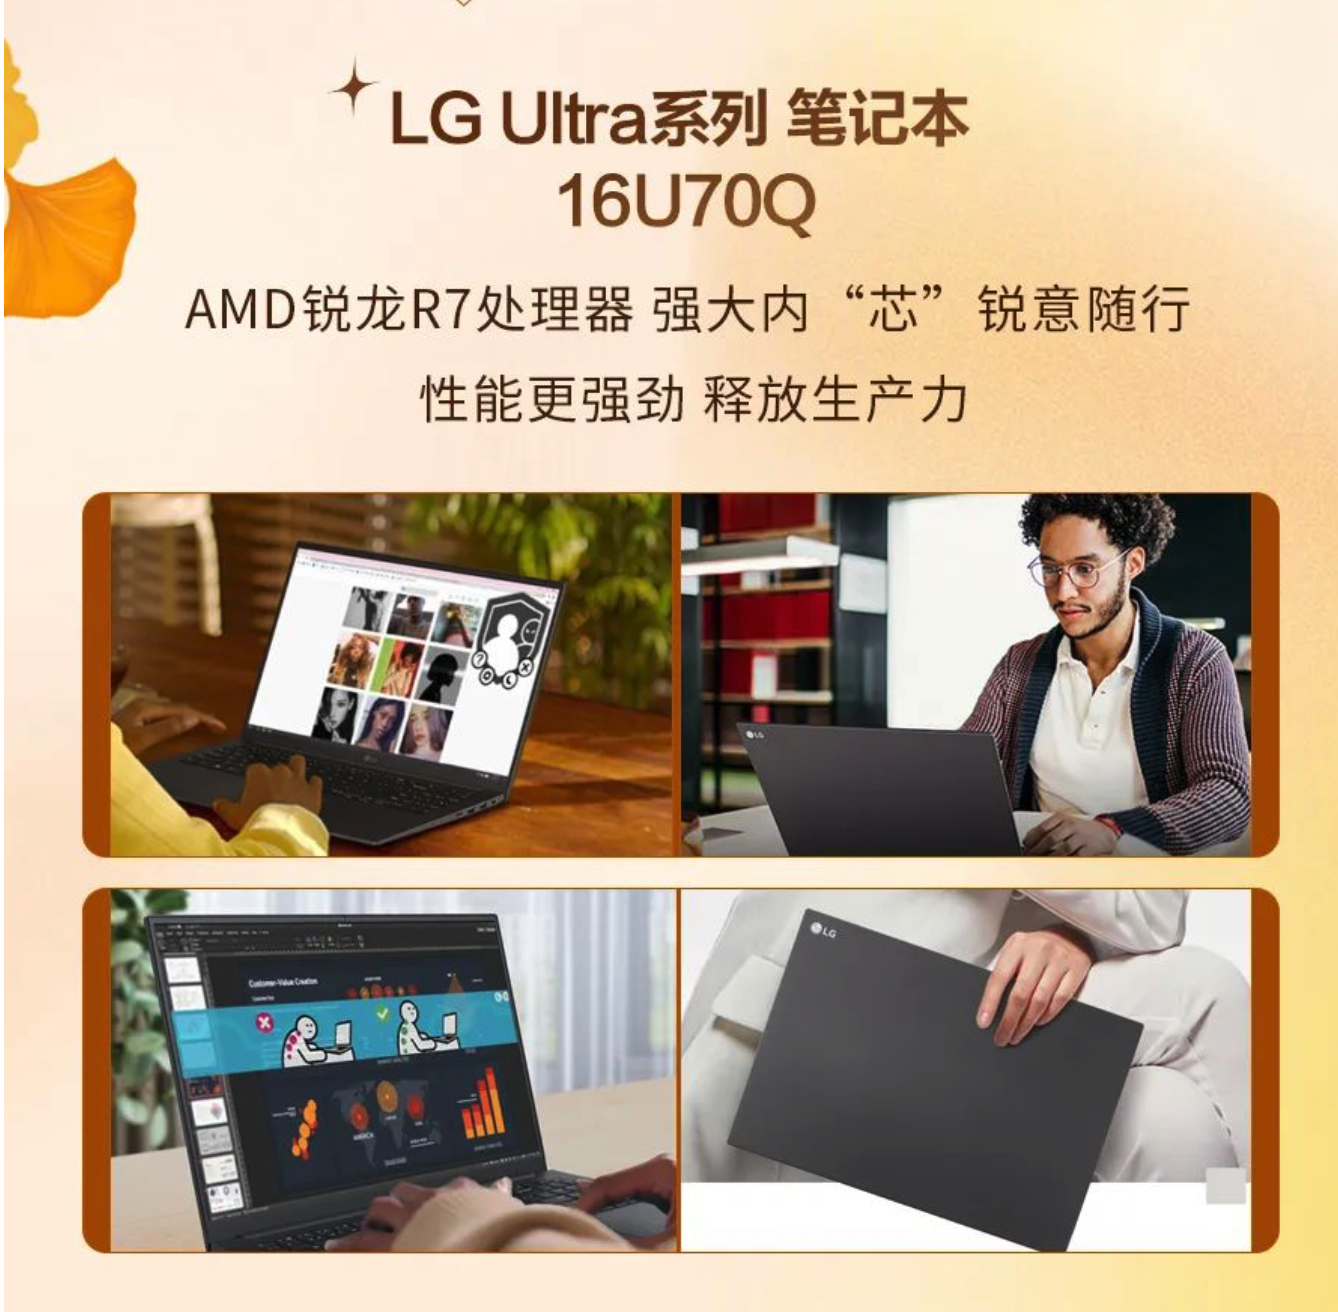 LG Ultra係列產品筆記本電腦行貨將要掛牌上市 	，配備AMD R7CPU